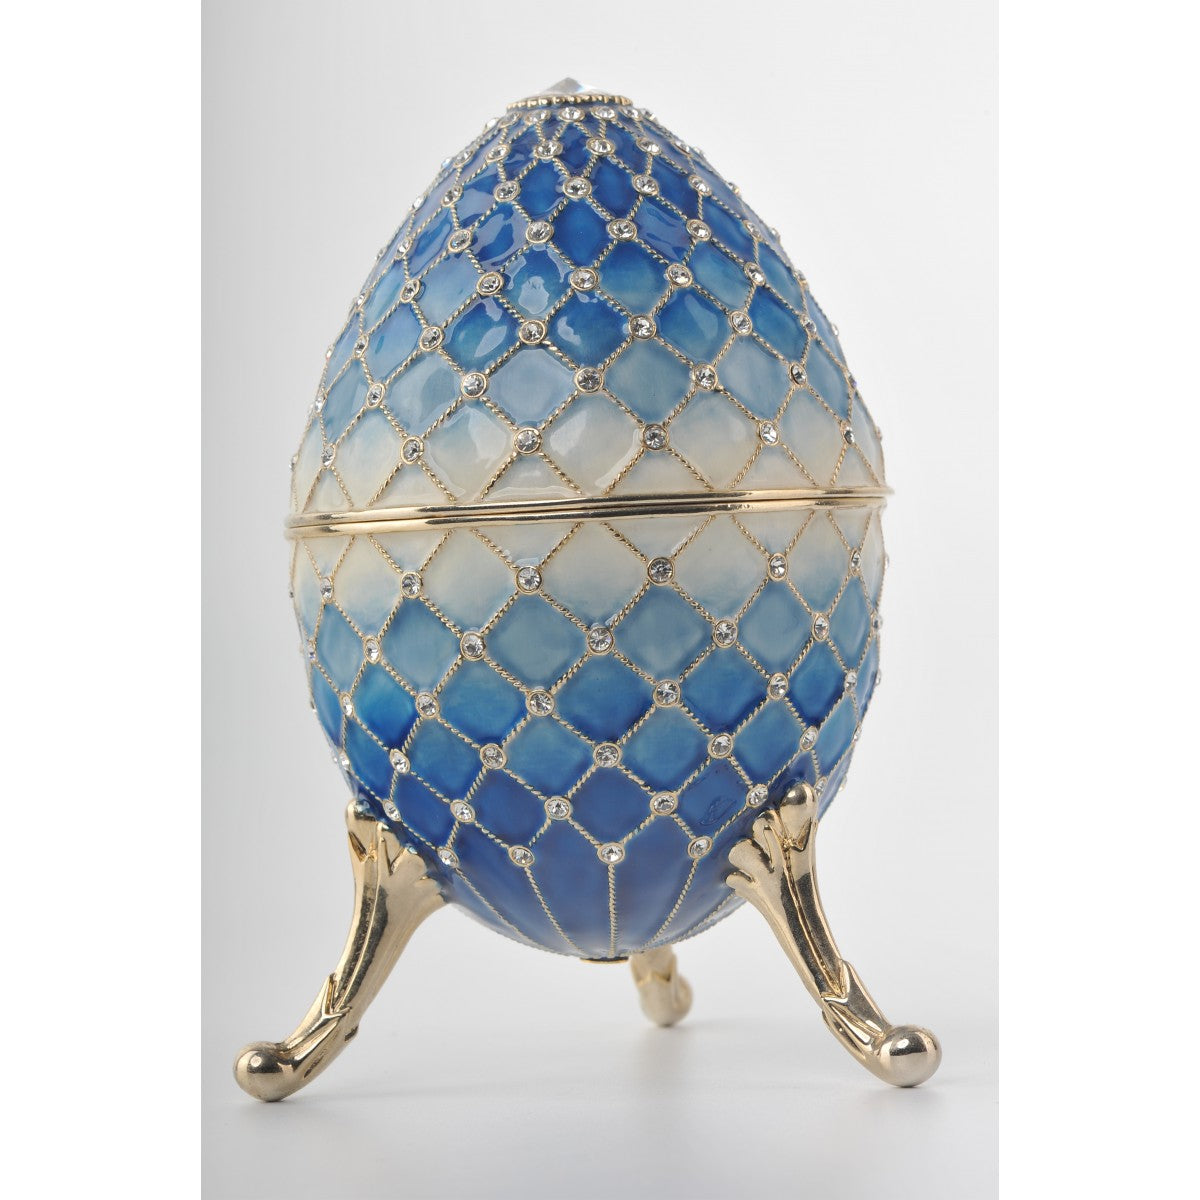 Blue Faberge egg by Keren Kopal